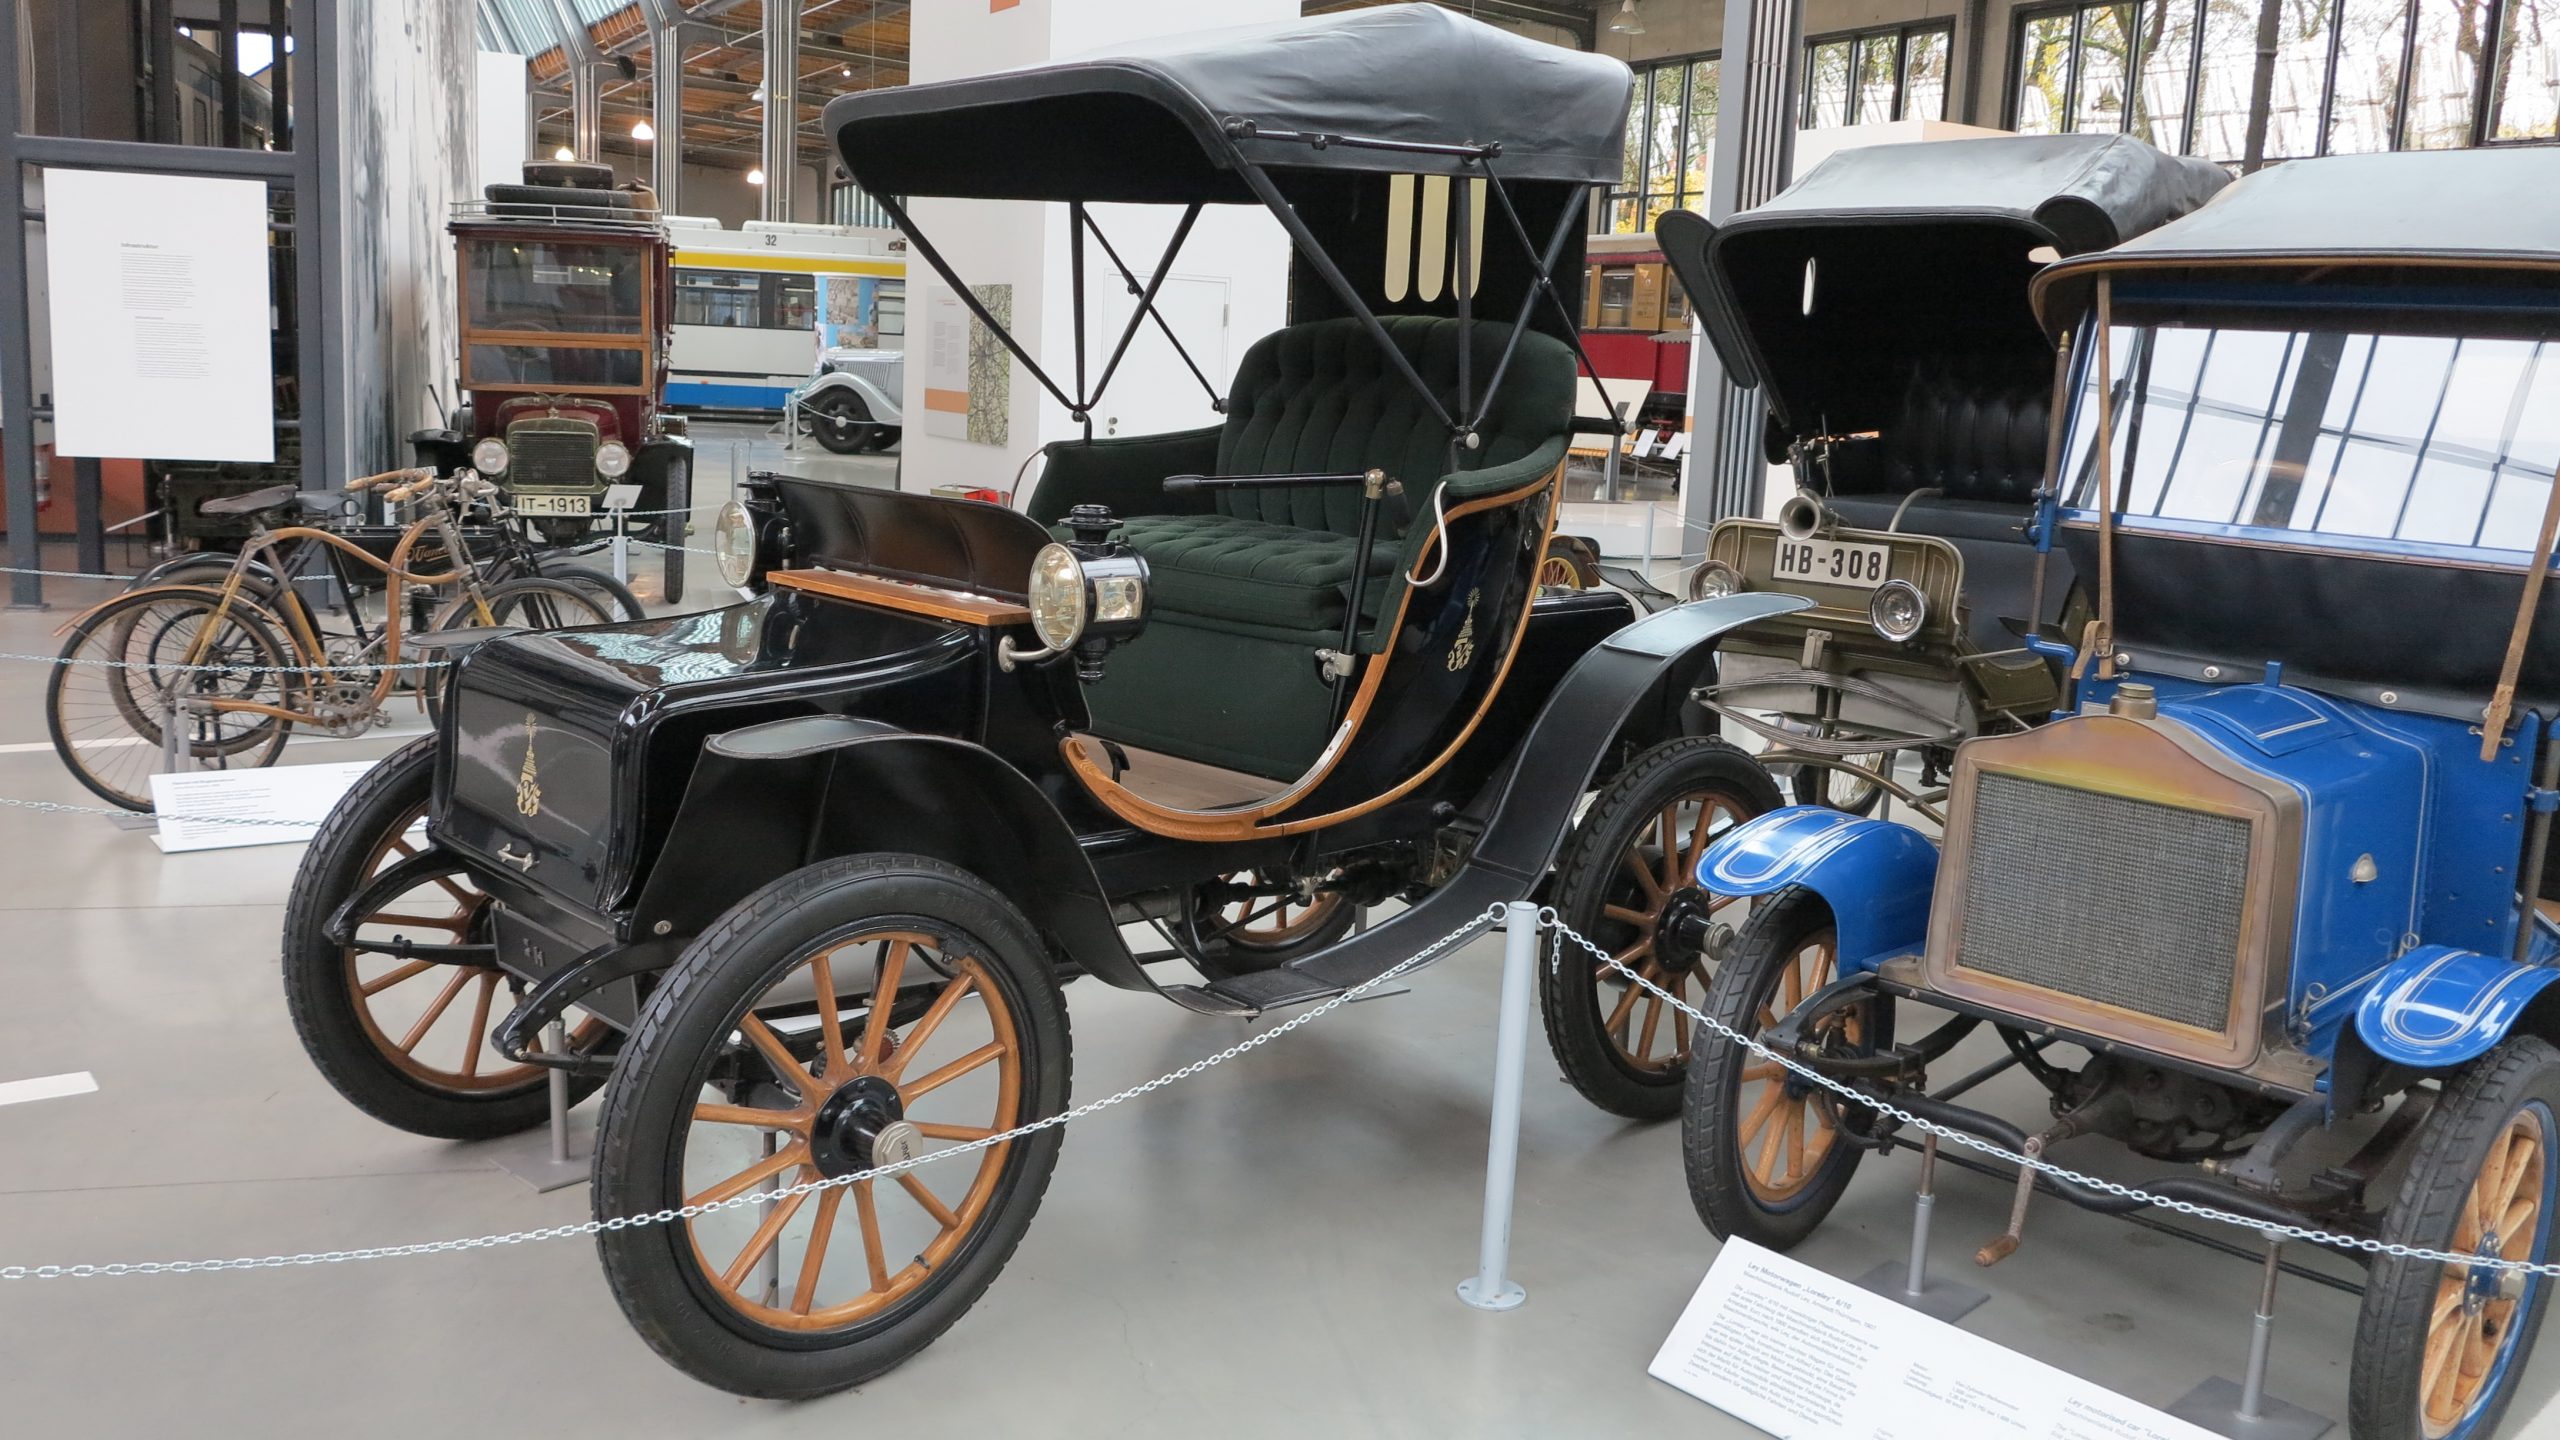 The Baker Electric Automotive Heritage Foundation